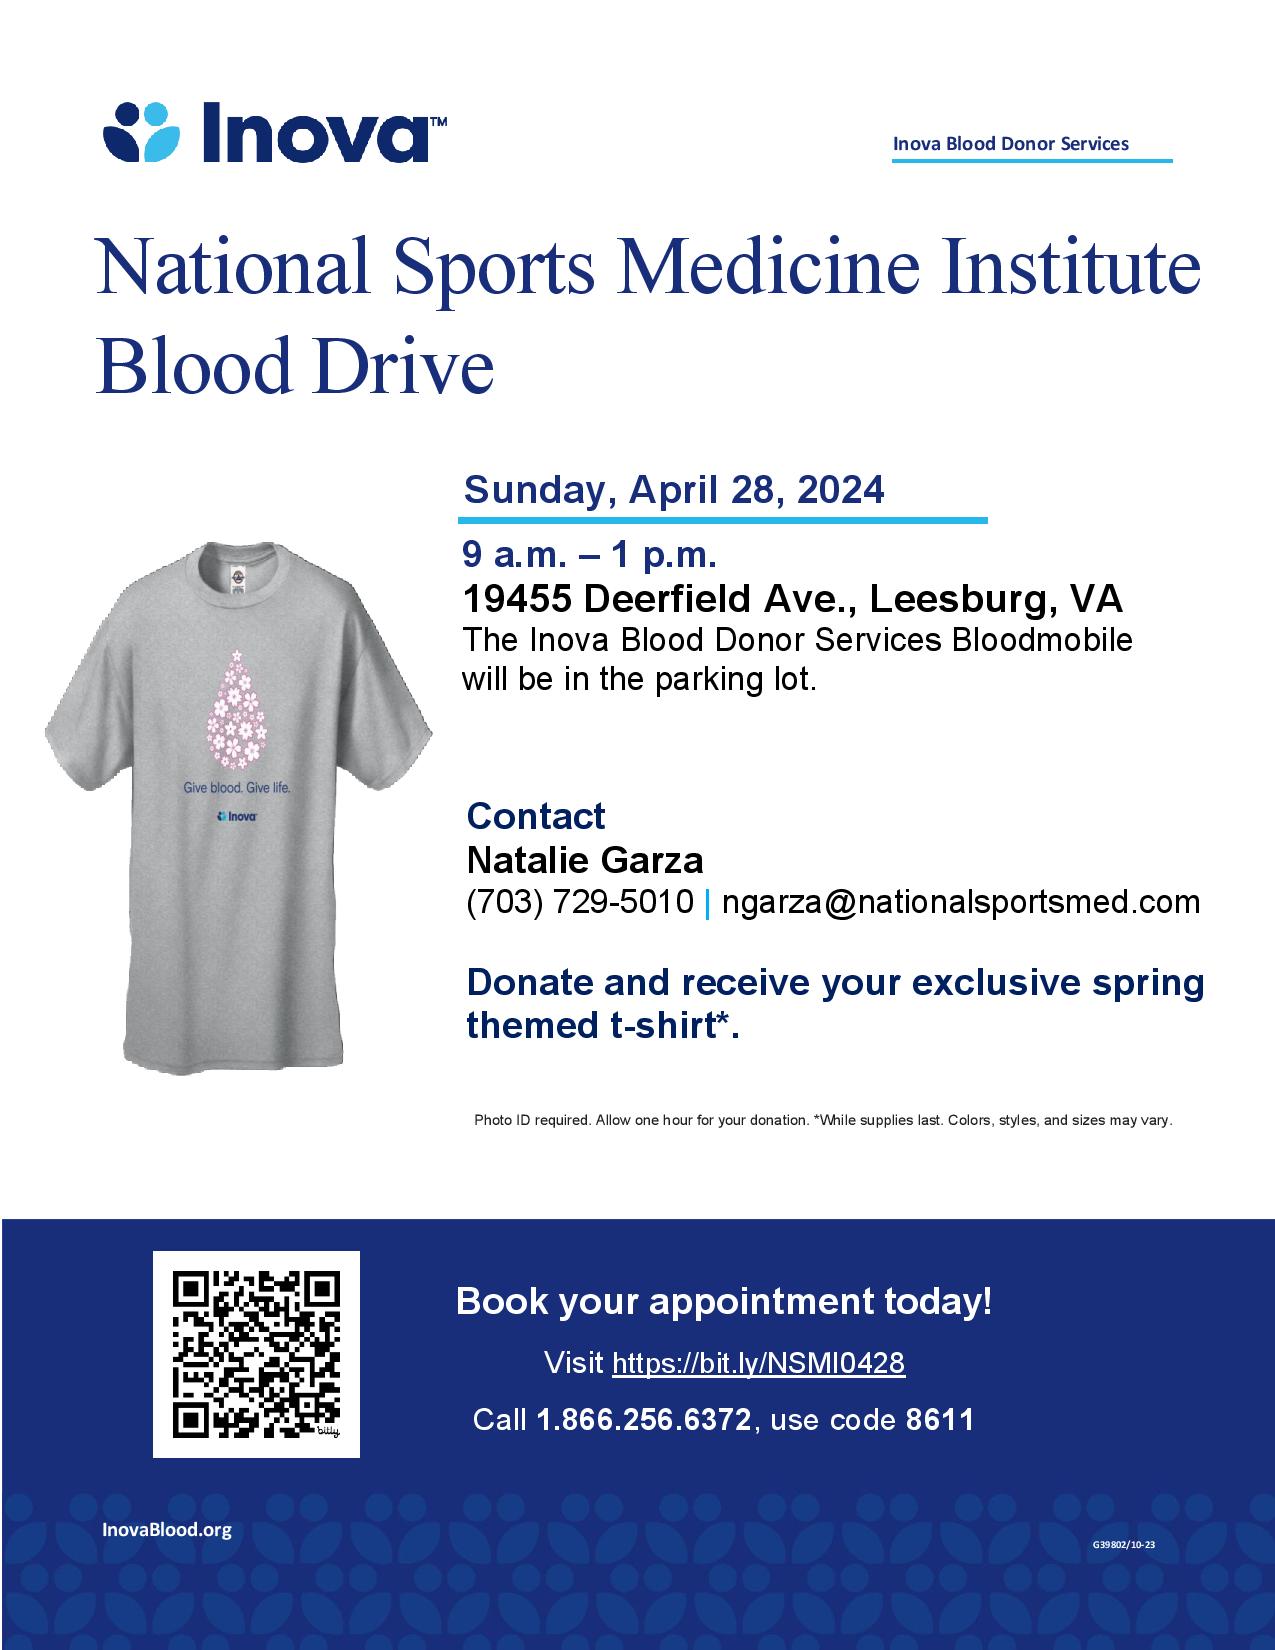 Blood Drive at National Sports Medicine Institute